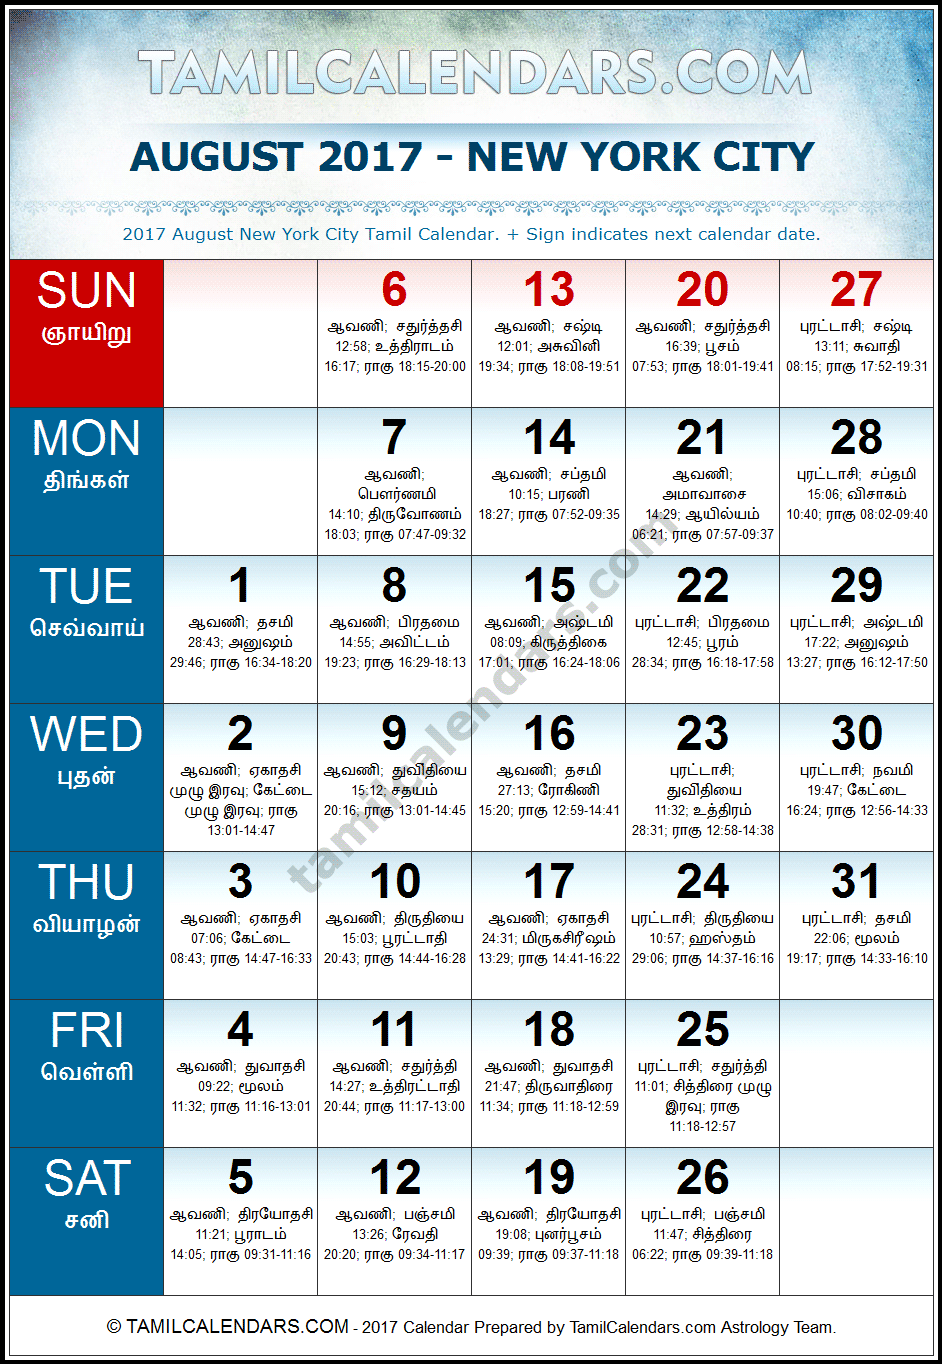 August 2017 Tamil Calendar for New York, USA